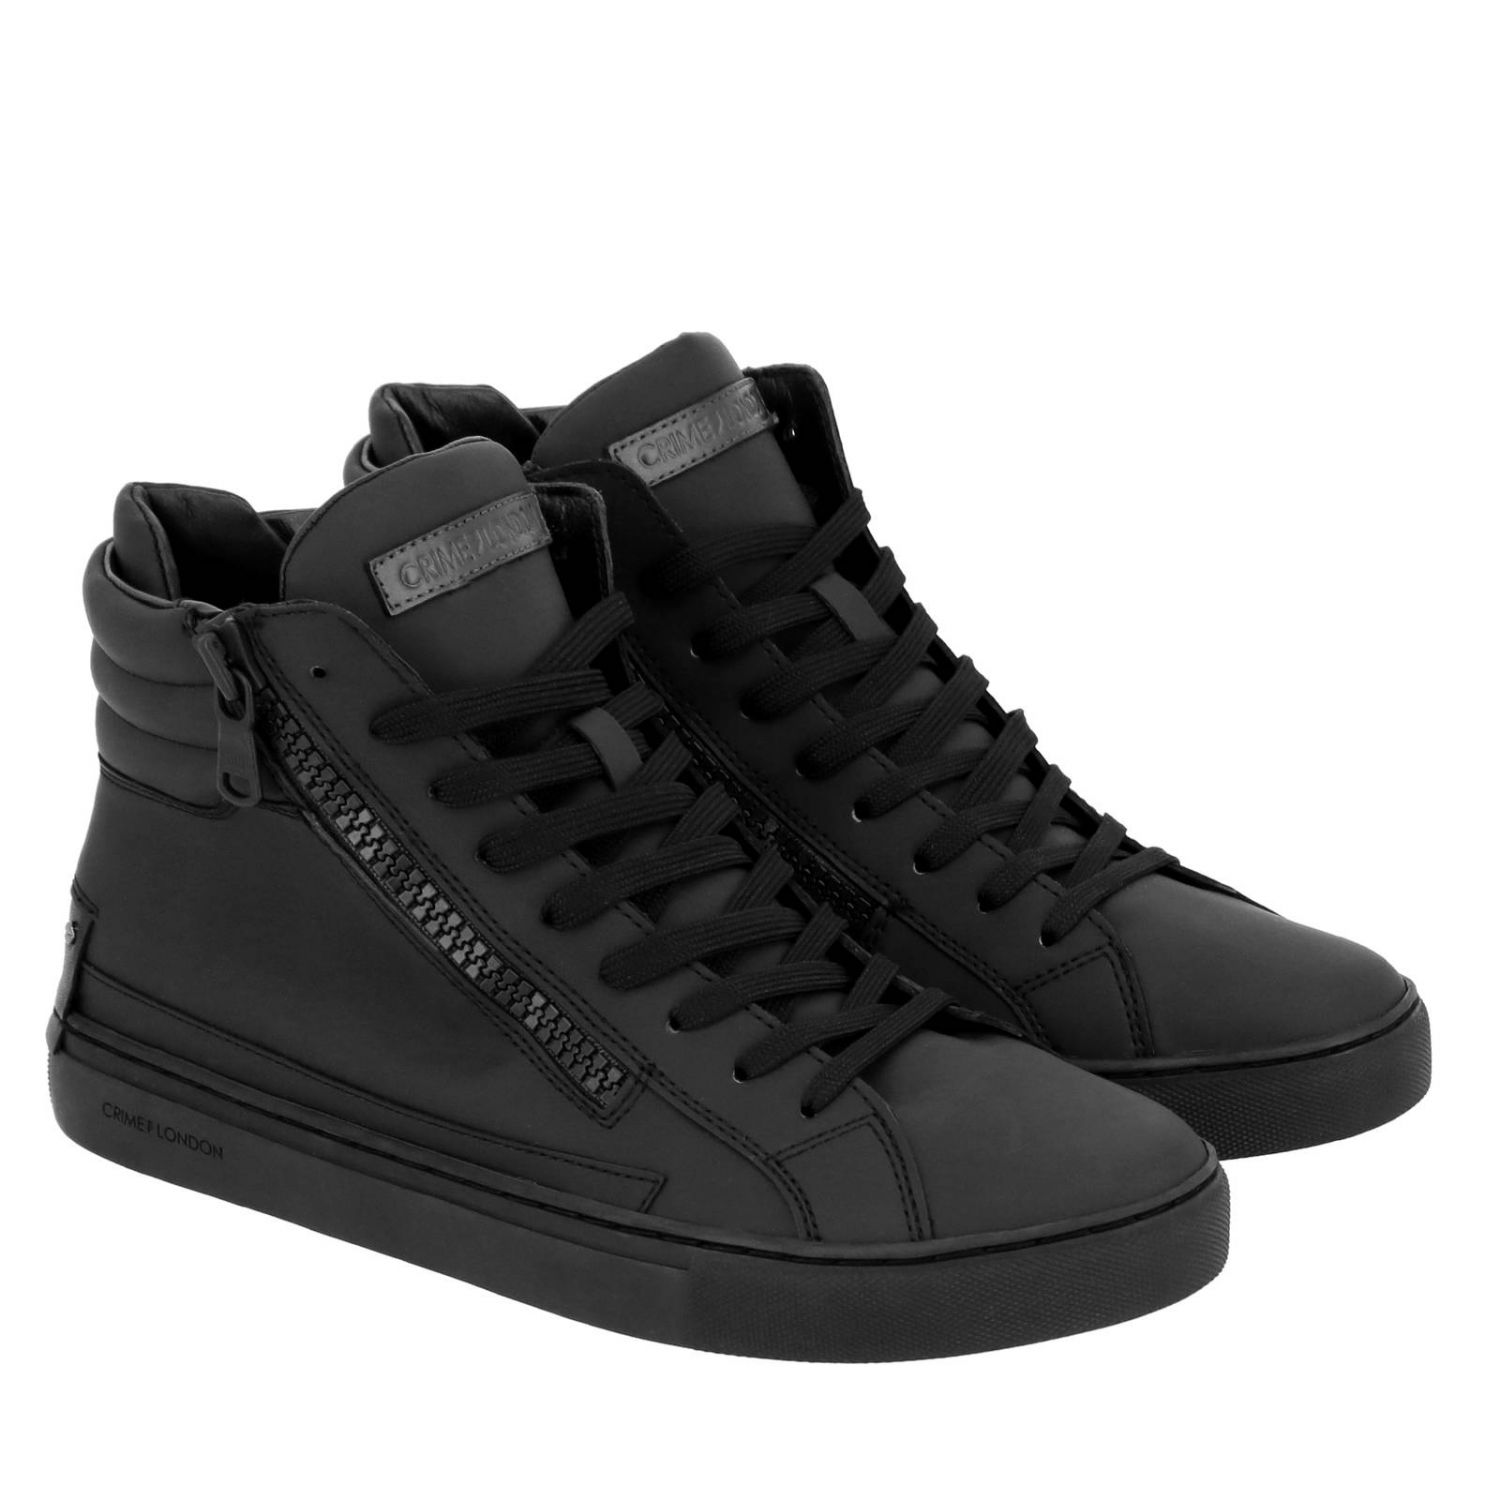 Crime London Outlet: Shoes men - Black | Sneakers Crime London 11320AA1 ...